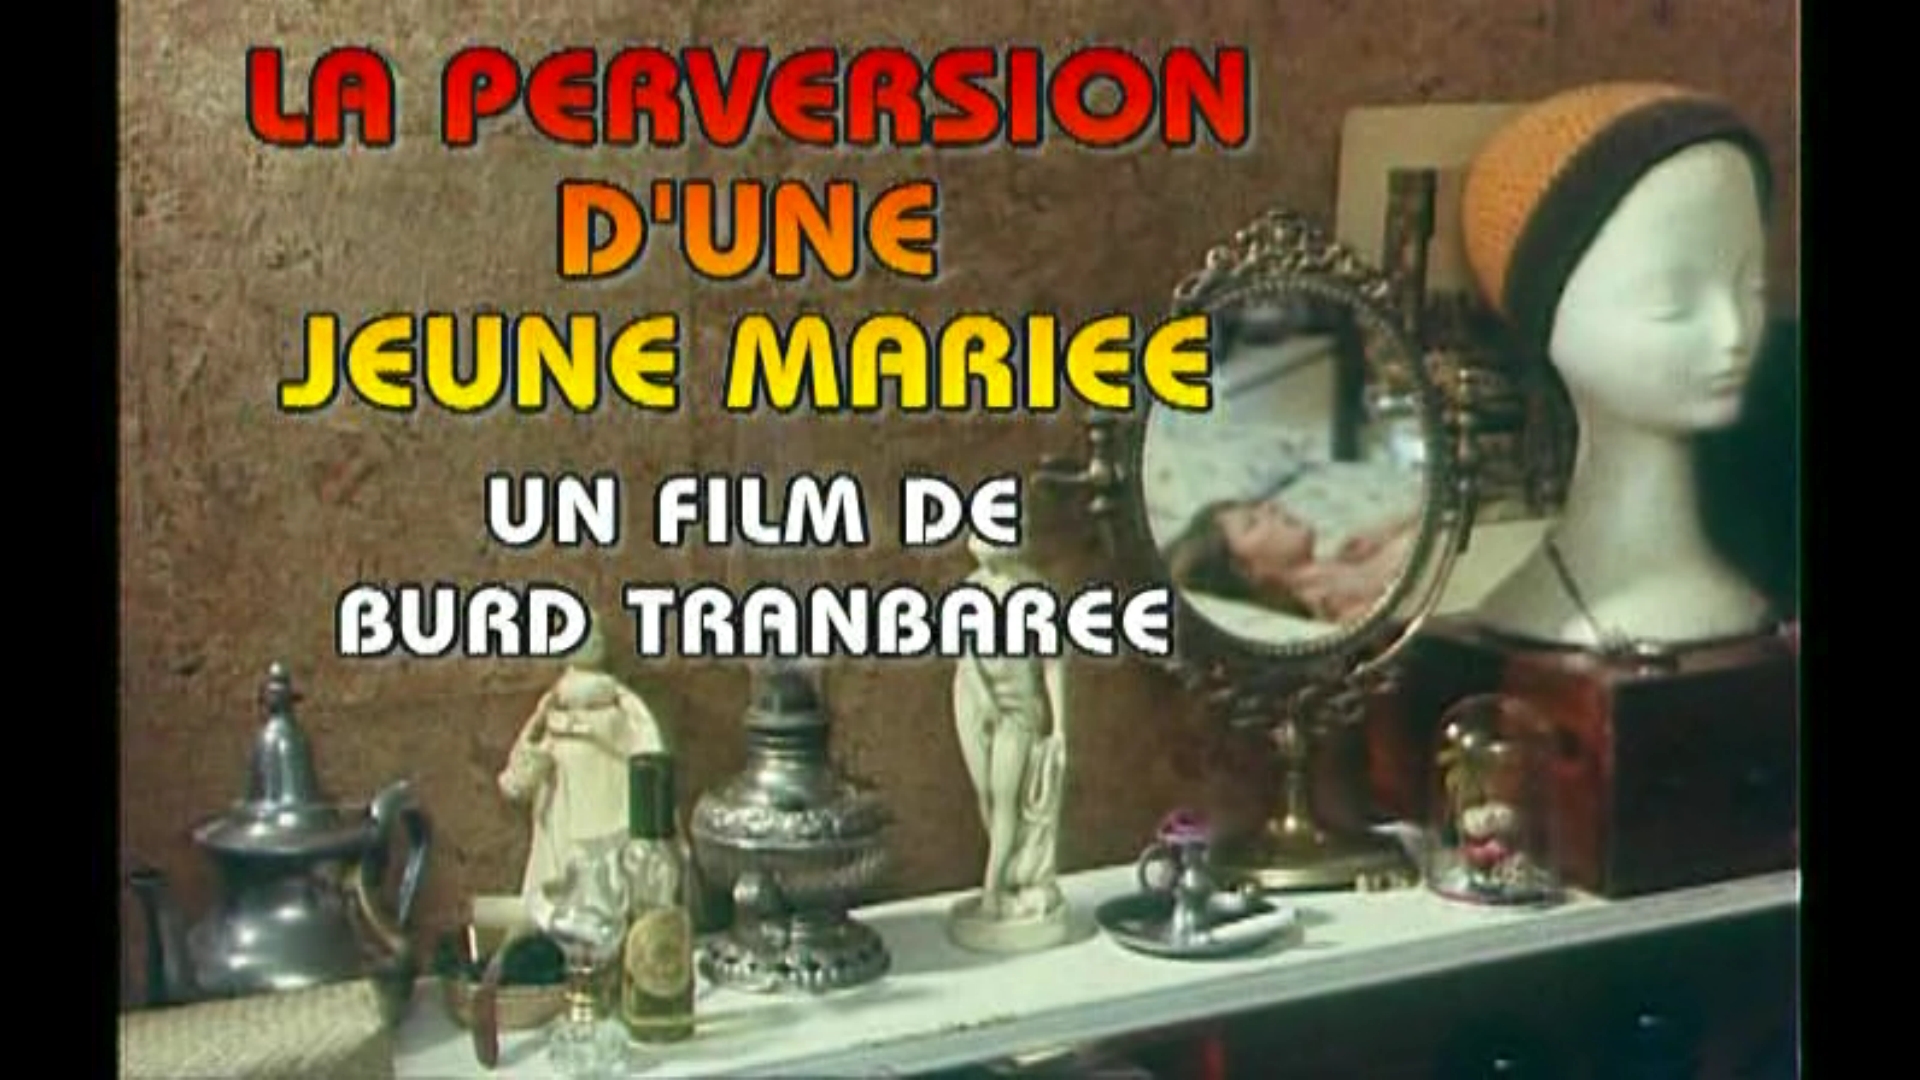 La Perversion d'une jeune mariée 1977 film scènes de nu